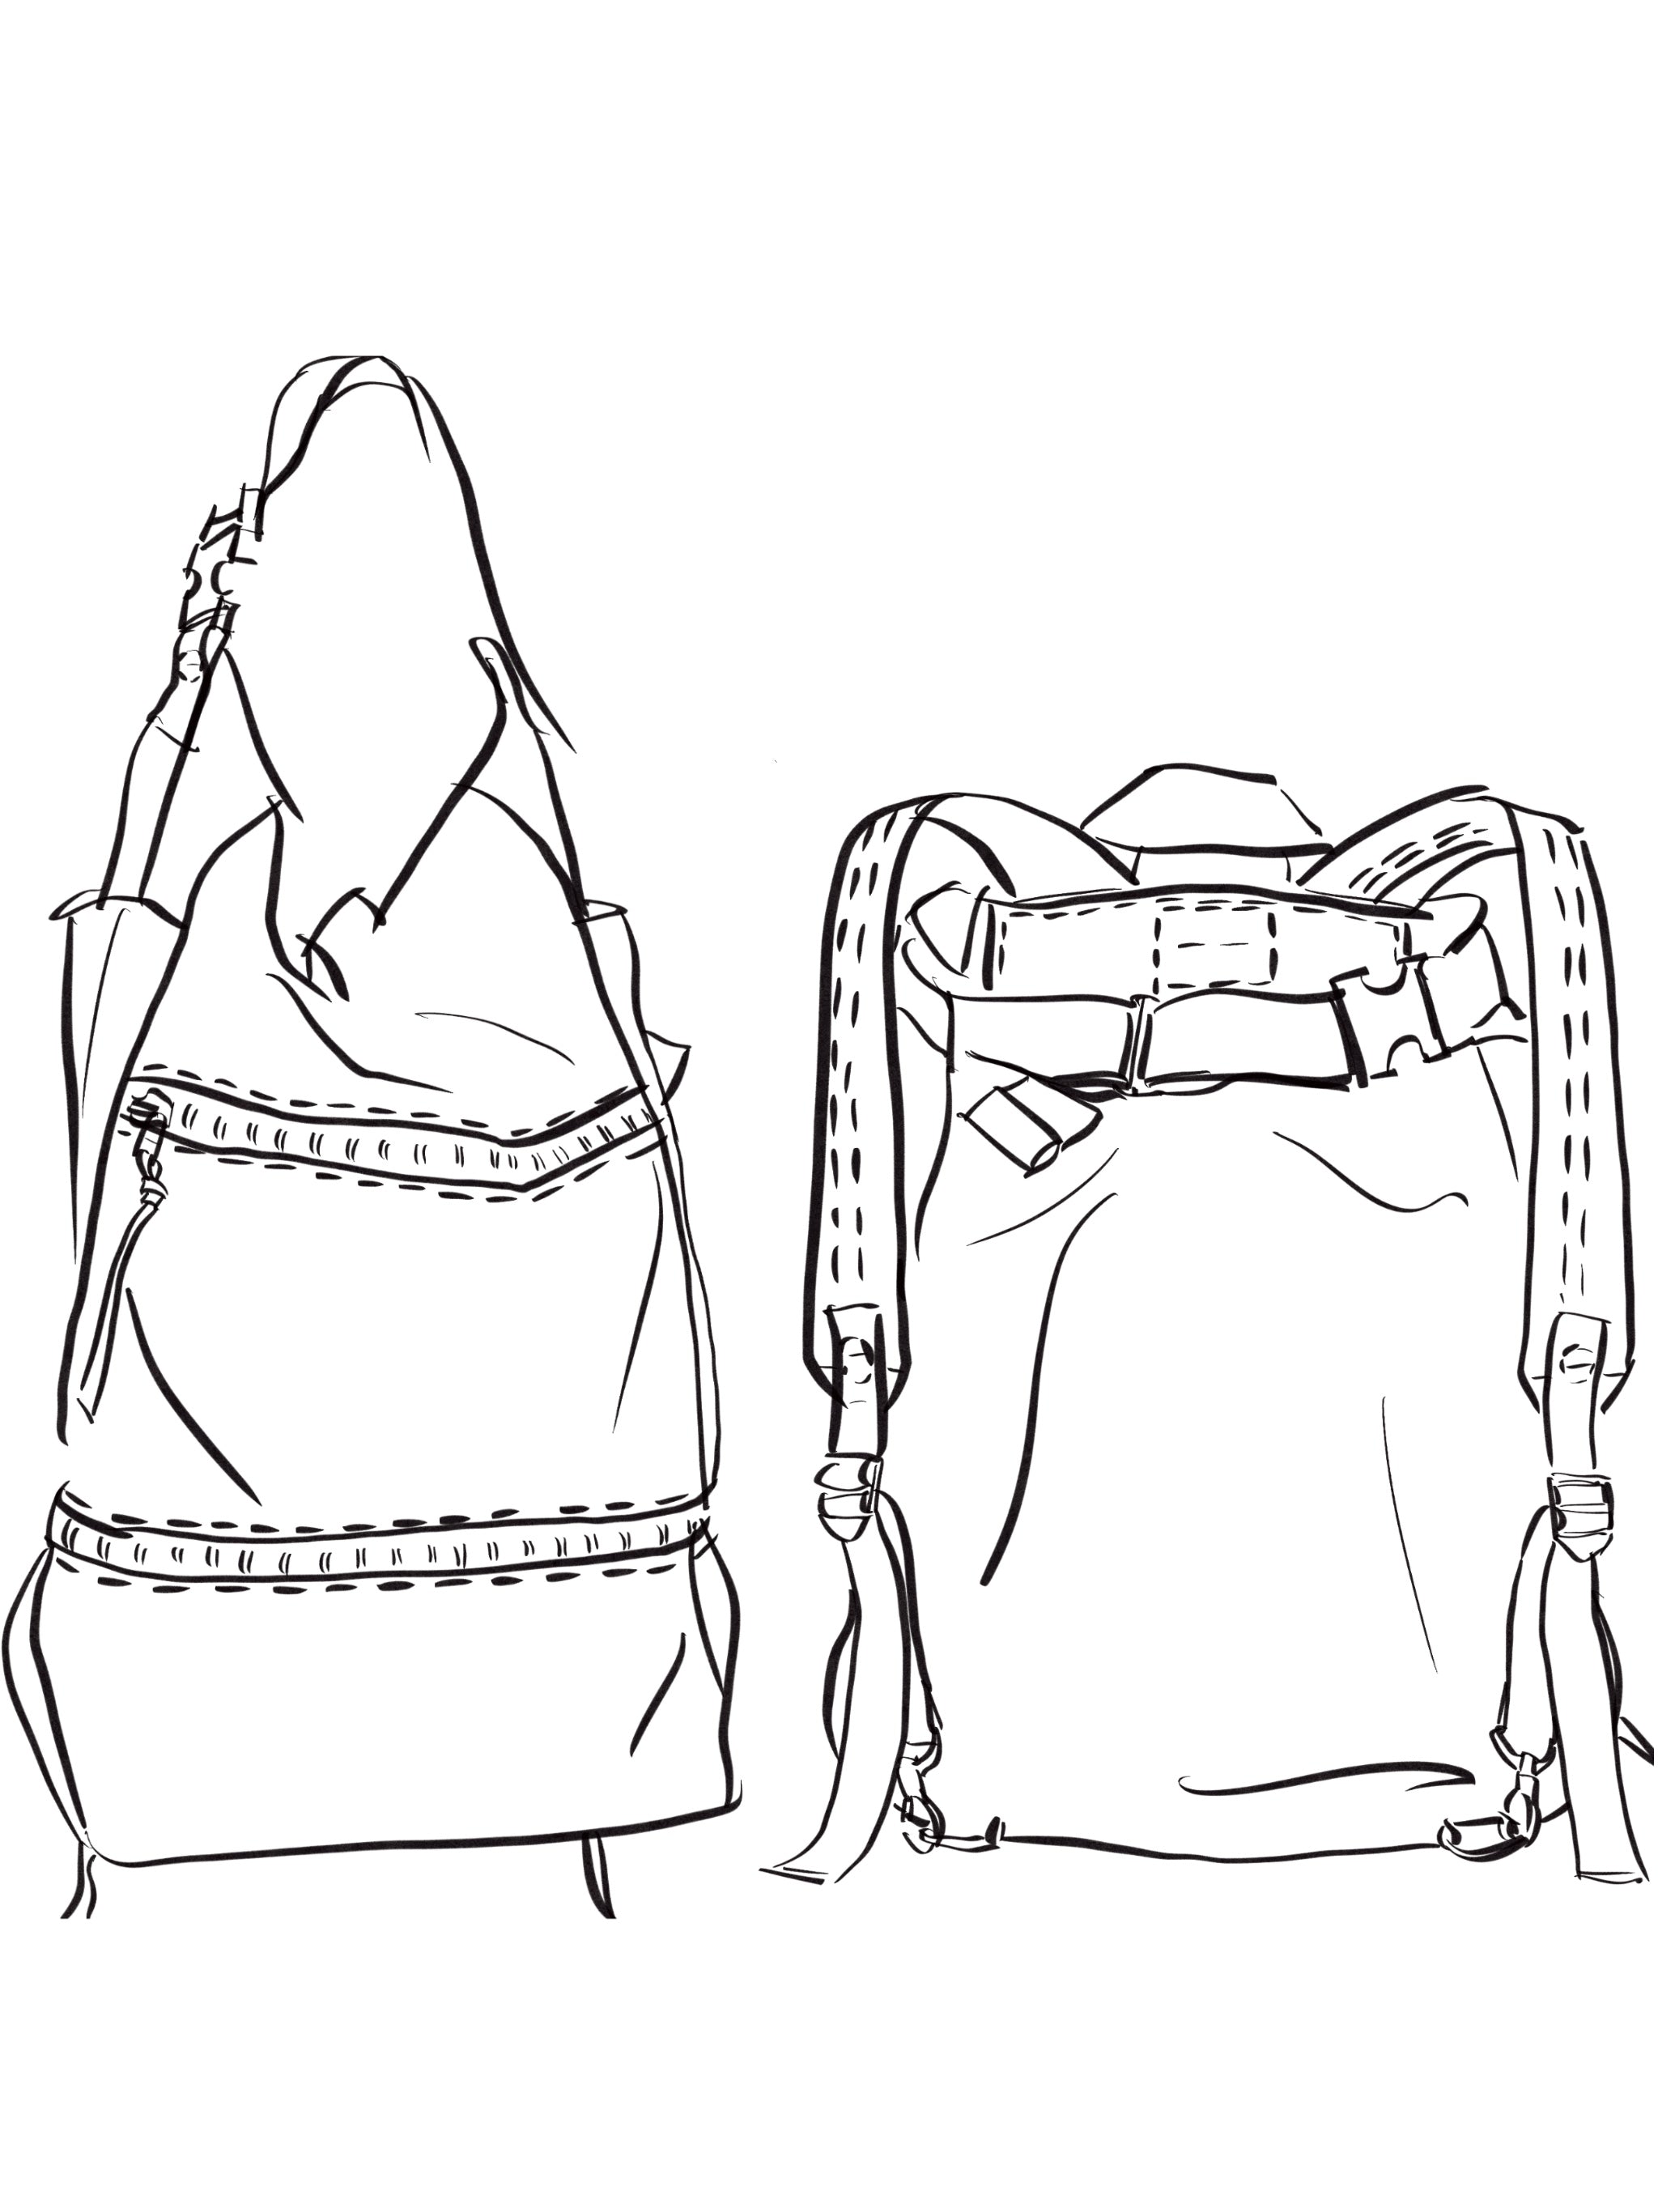 designing a backpack for grownups - shortyLOVE